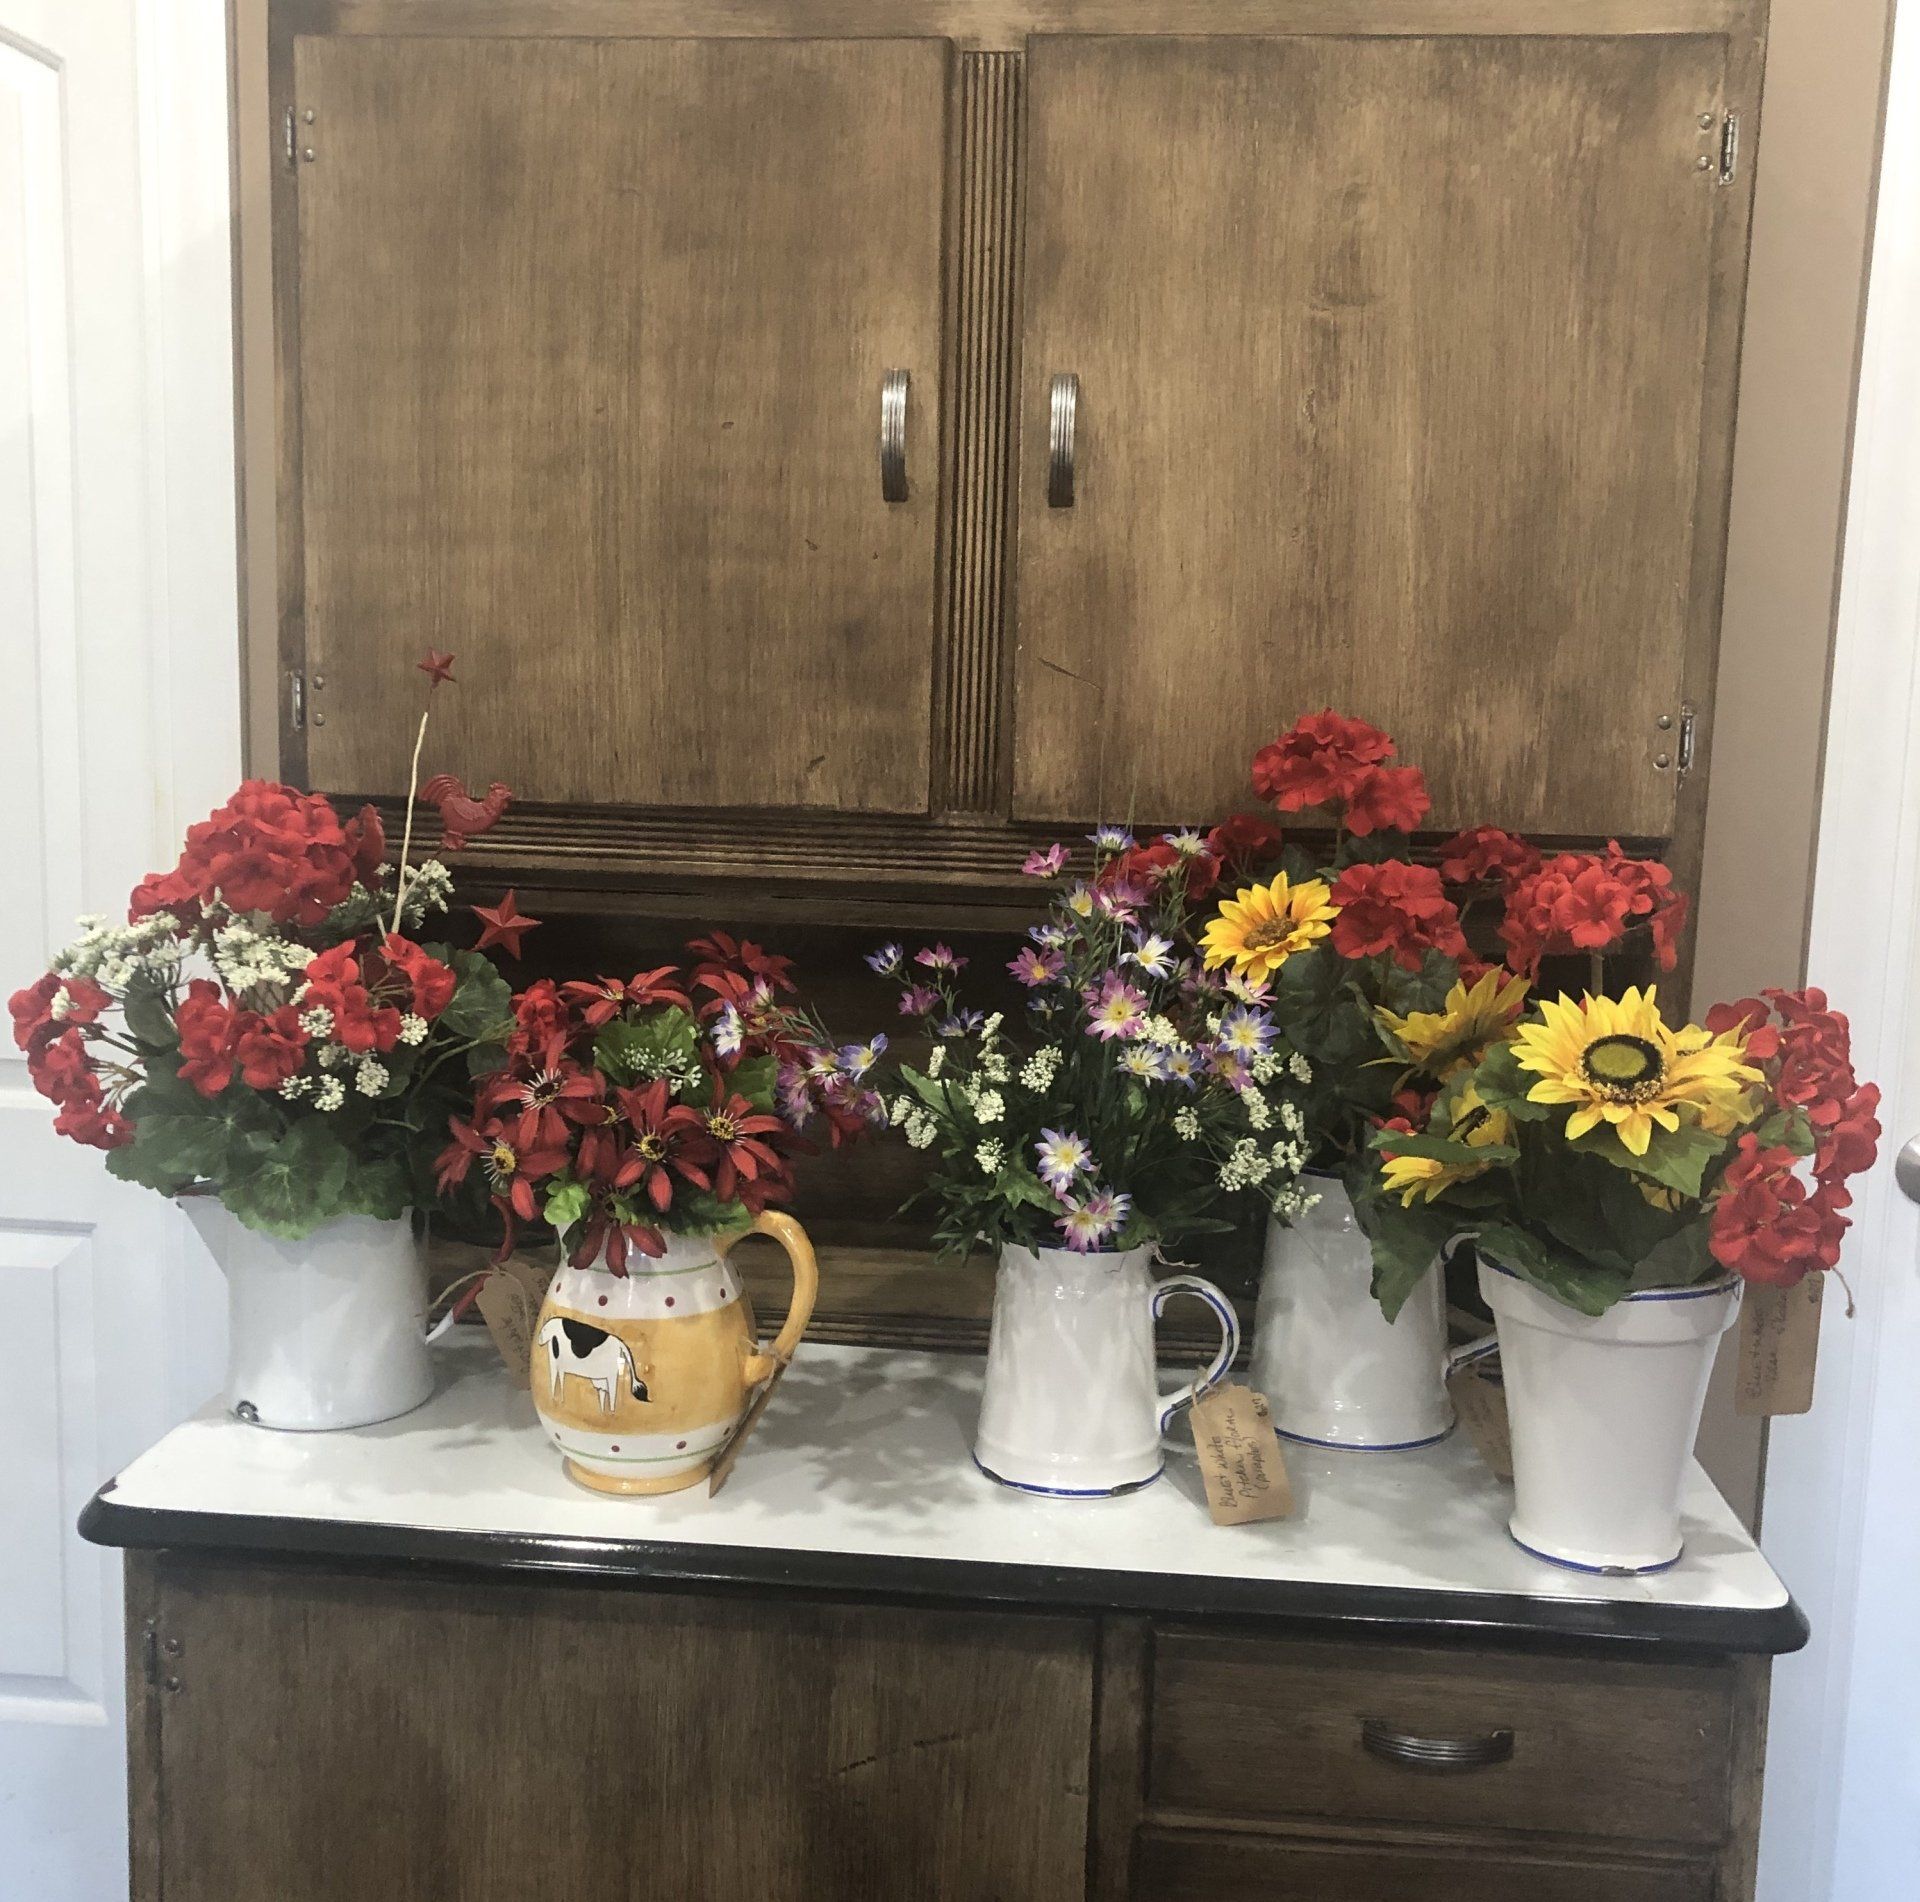 An assortment of our custom floral arrangements.